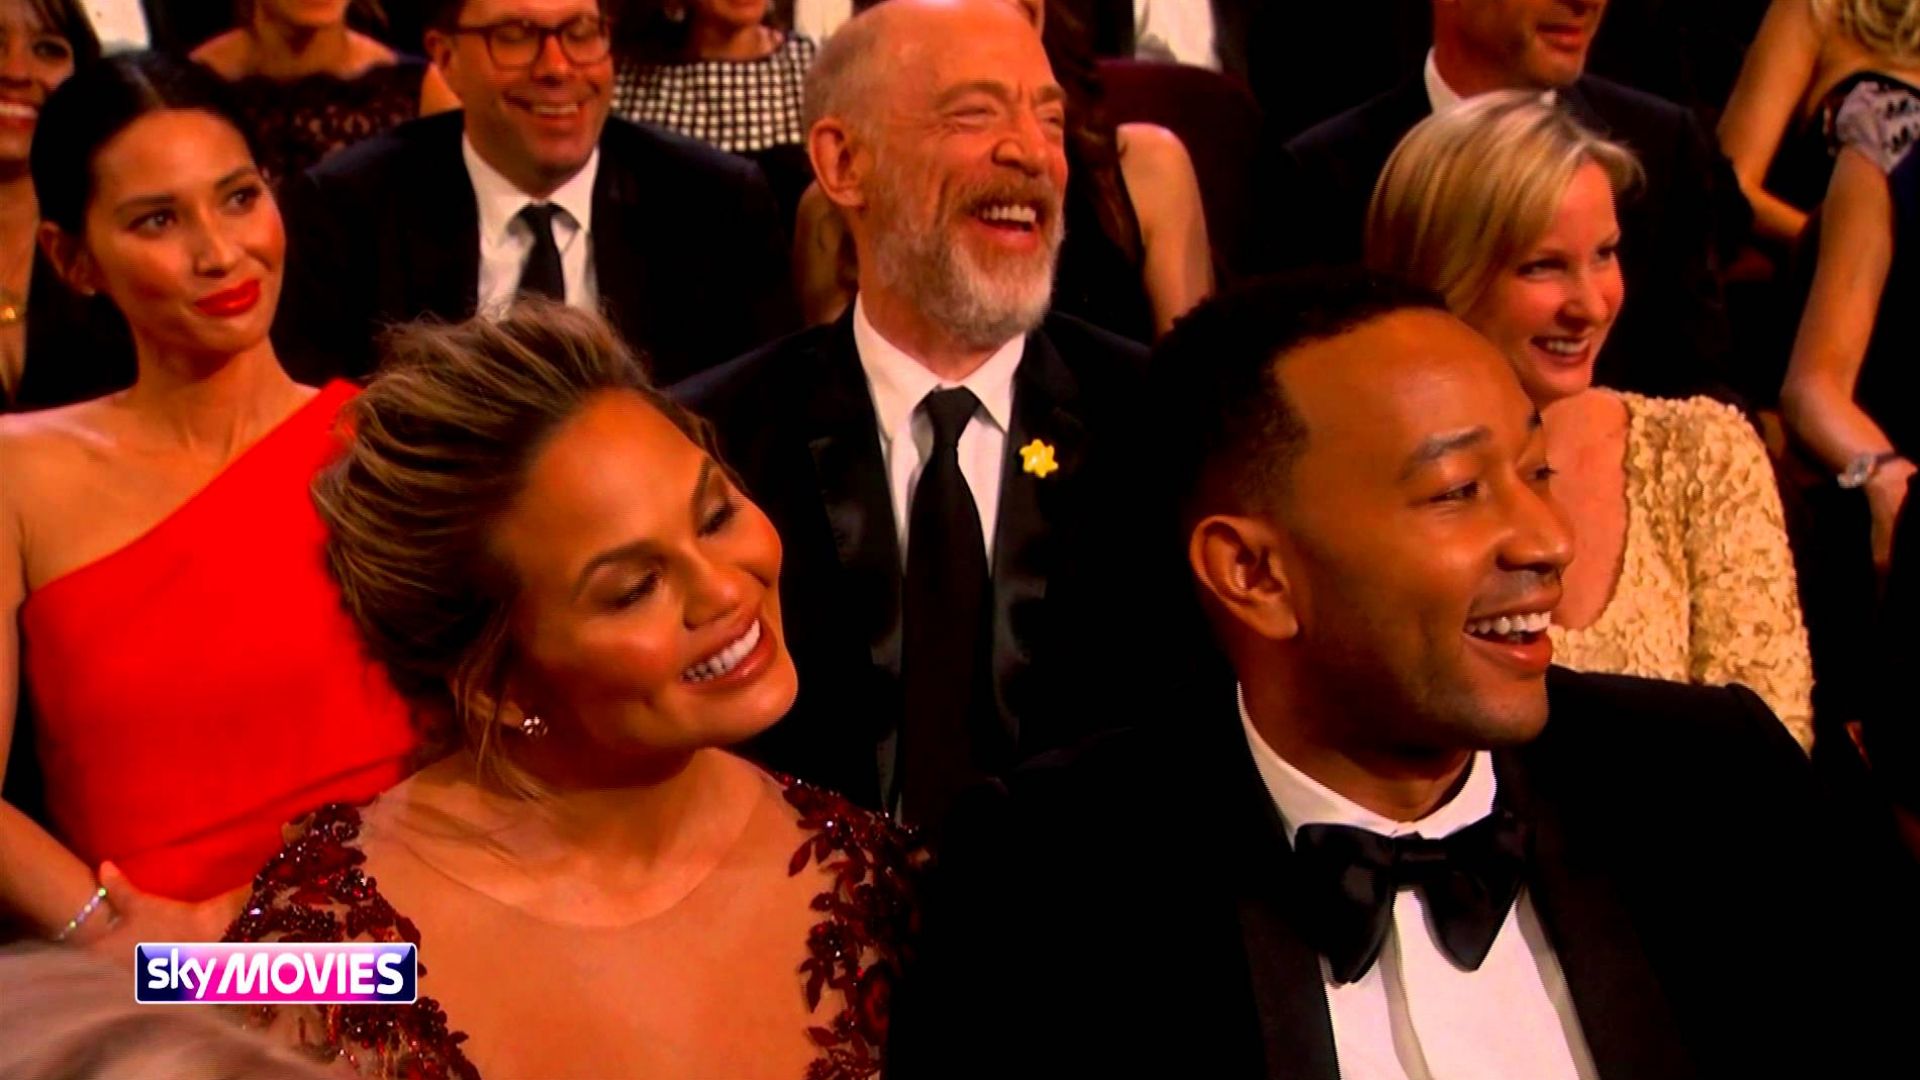 Watch Chris Rock Tackle #OscarsSoWhite in Brutally Honest Op